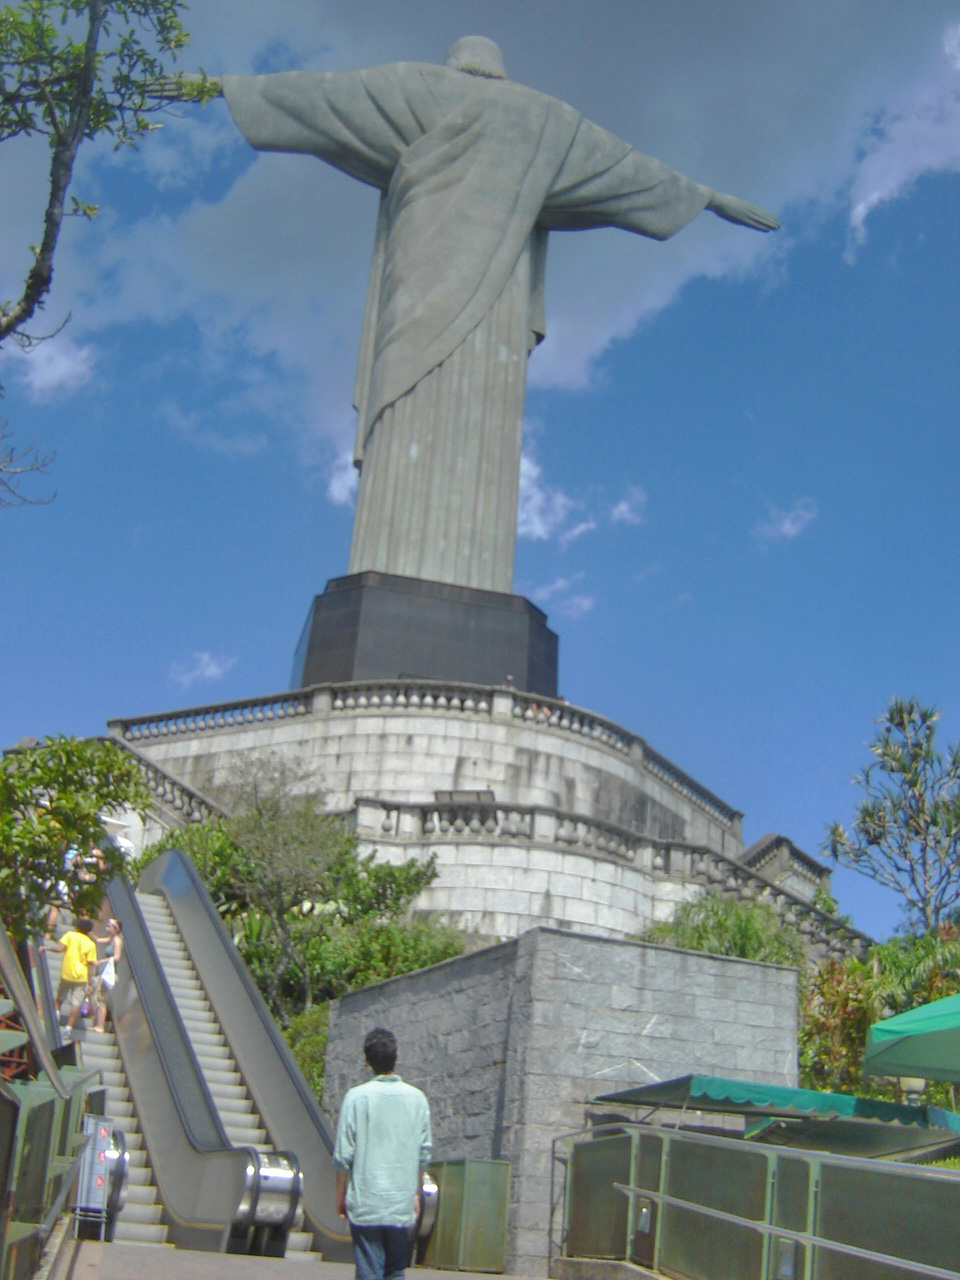 Me staring at the Cristo Redentor statue in Rio de Janeiro, Brazil